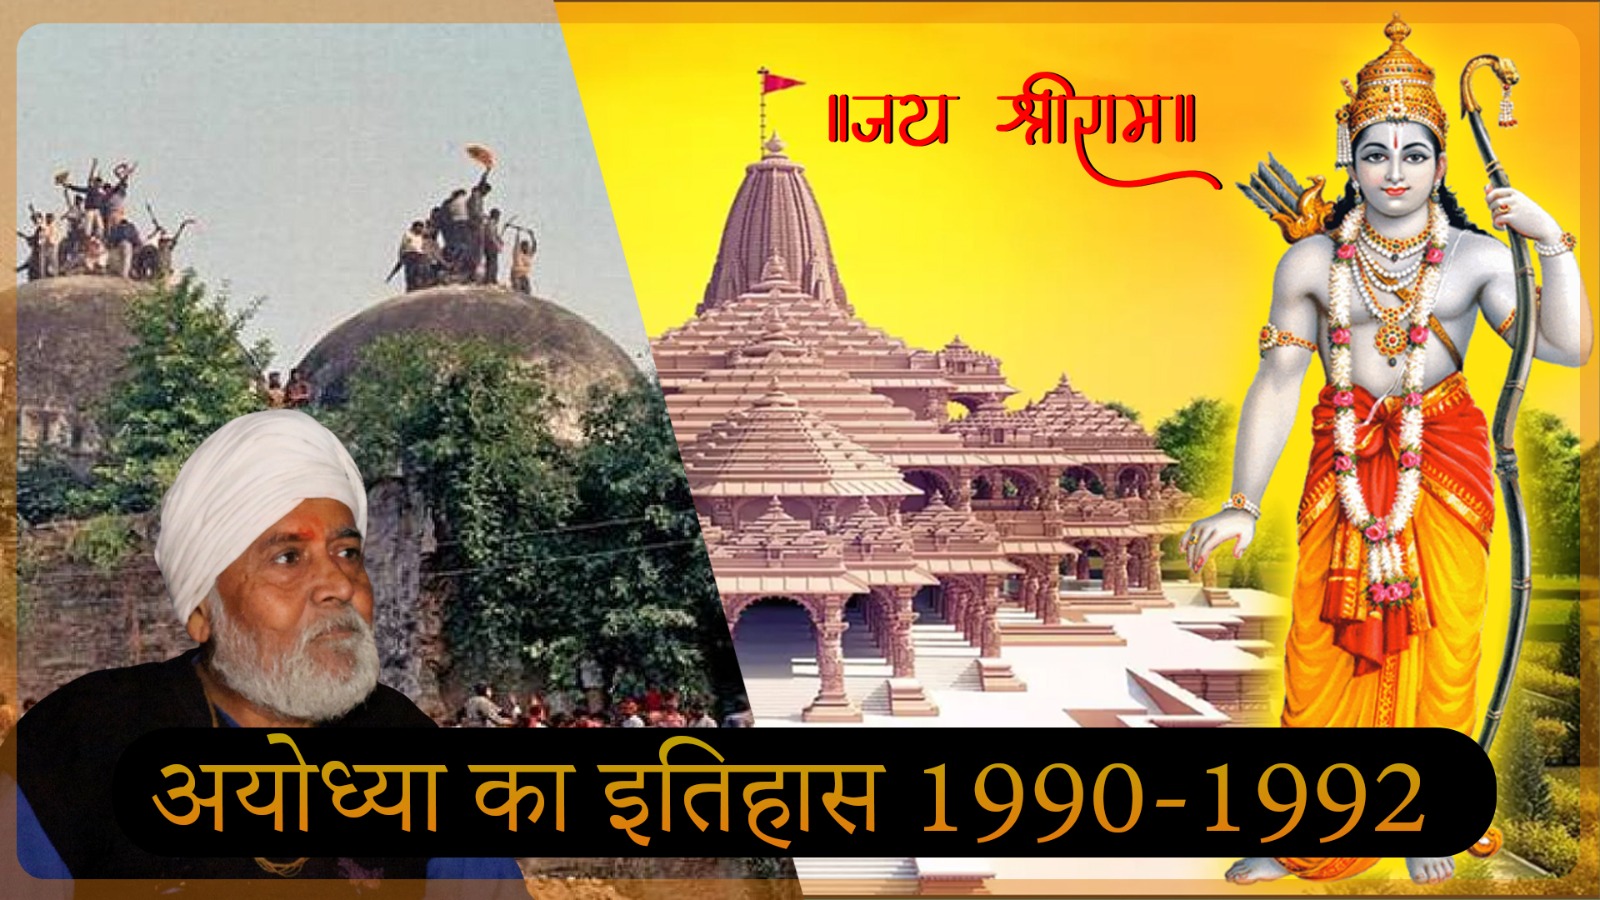 अयोध्या का इतिहास 1990-1992 | Naga Sadhu history | Aayodhya | Aarambhtv Telecast